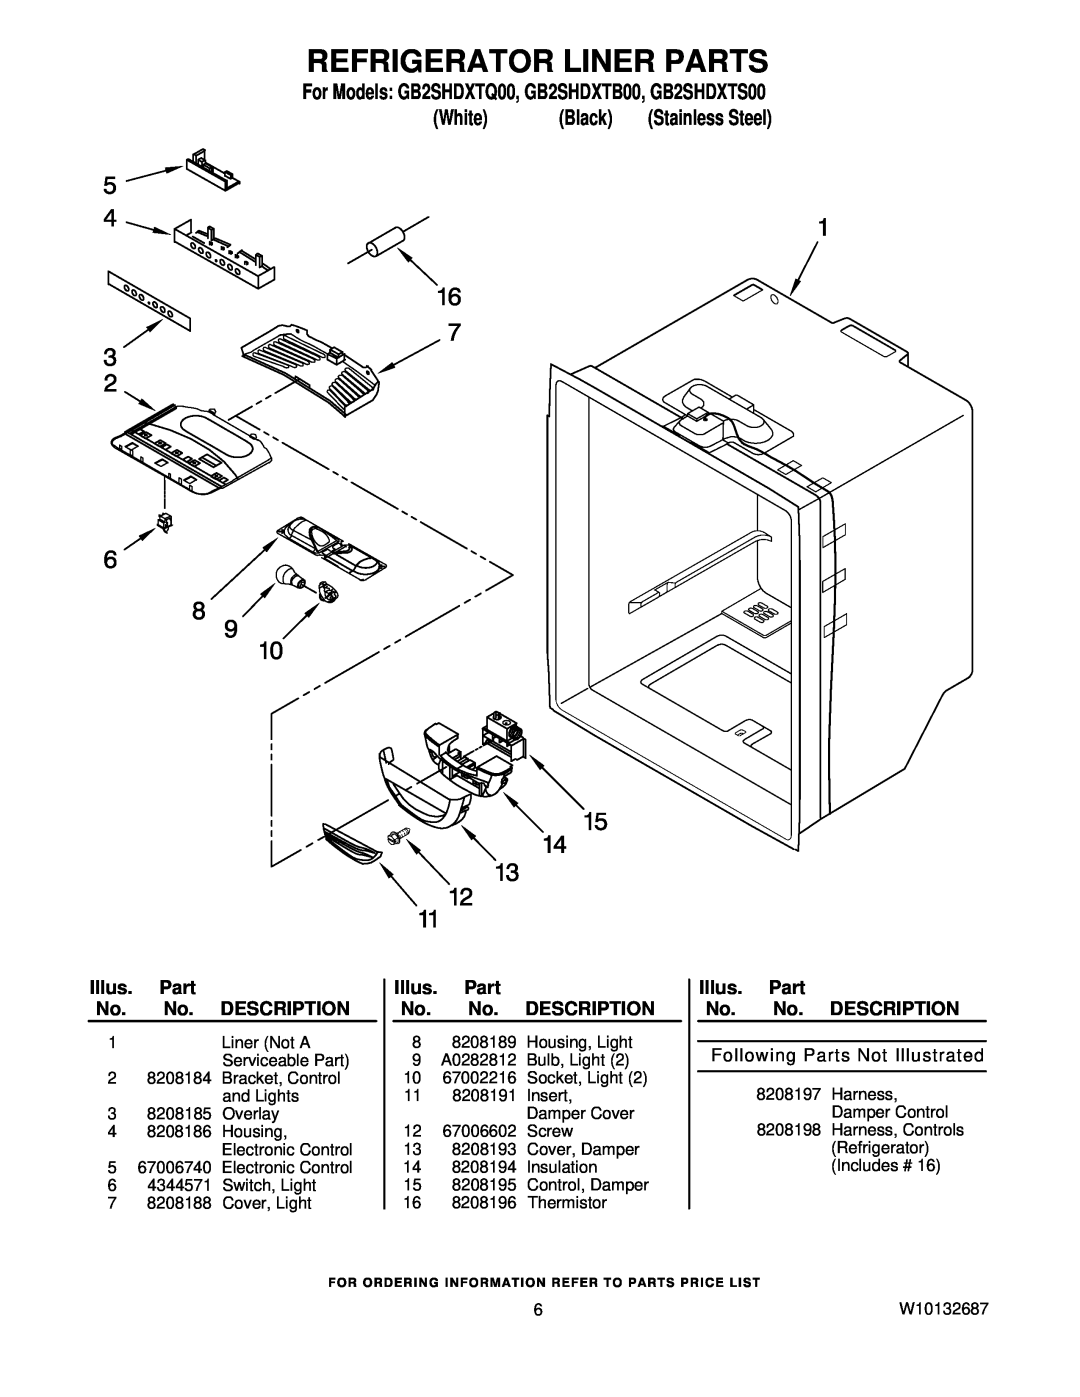 Whirlpool manual Refrigerator Liner Parts, For Models GB2SHDXTQ00, GB2SHDXTB00, GB2SHDXTS00, White, Black 